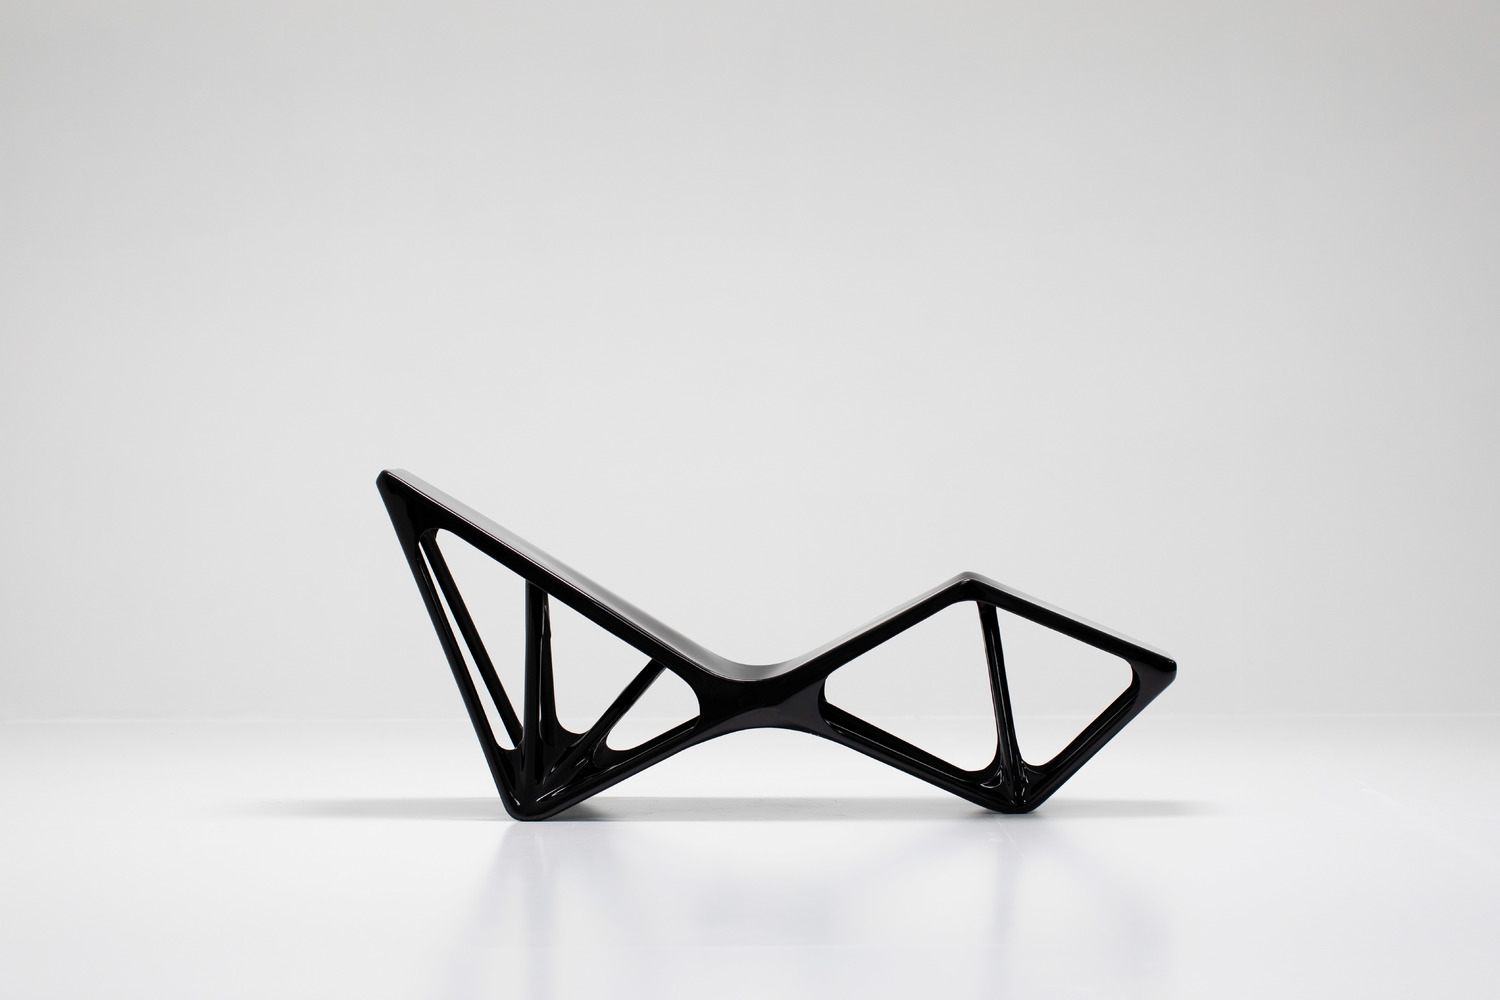 Fibreglass chaise longue